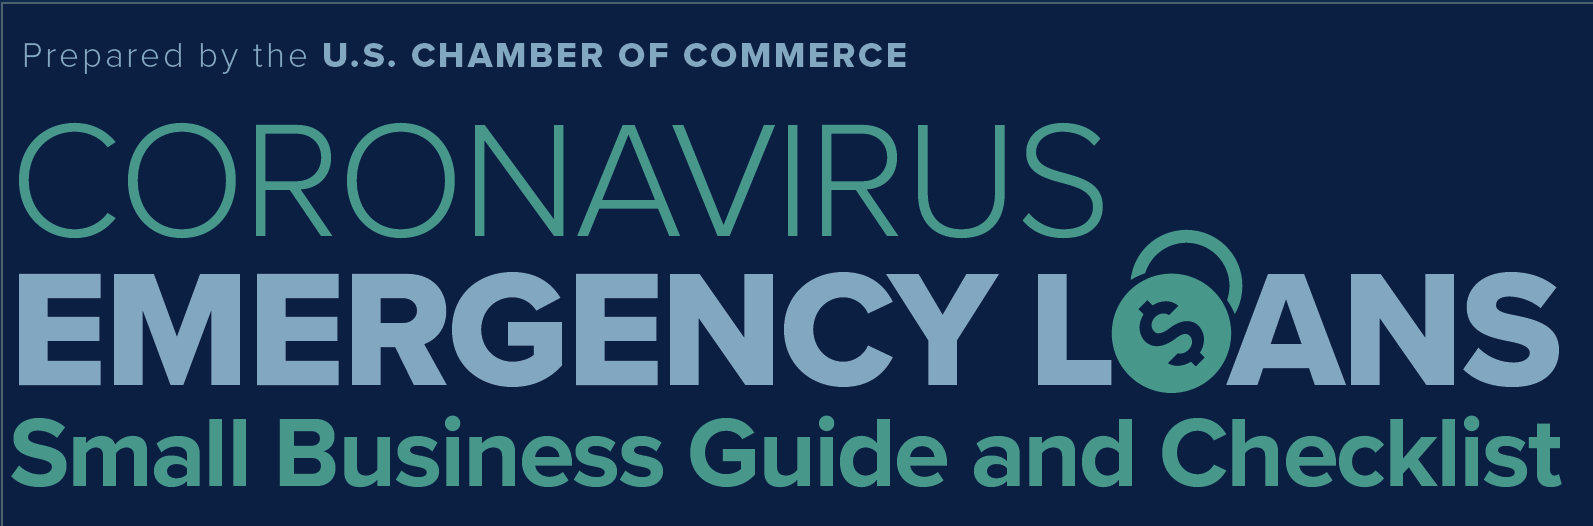 US Chamber Coronavirus Emergency Loans Small Business Checklist Photo